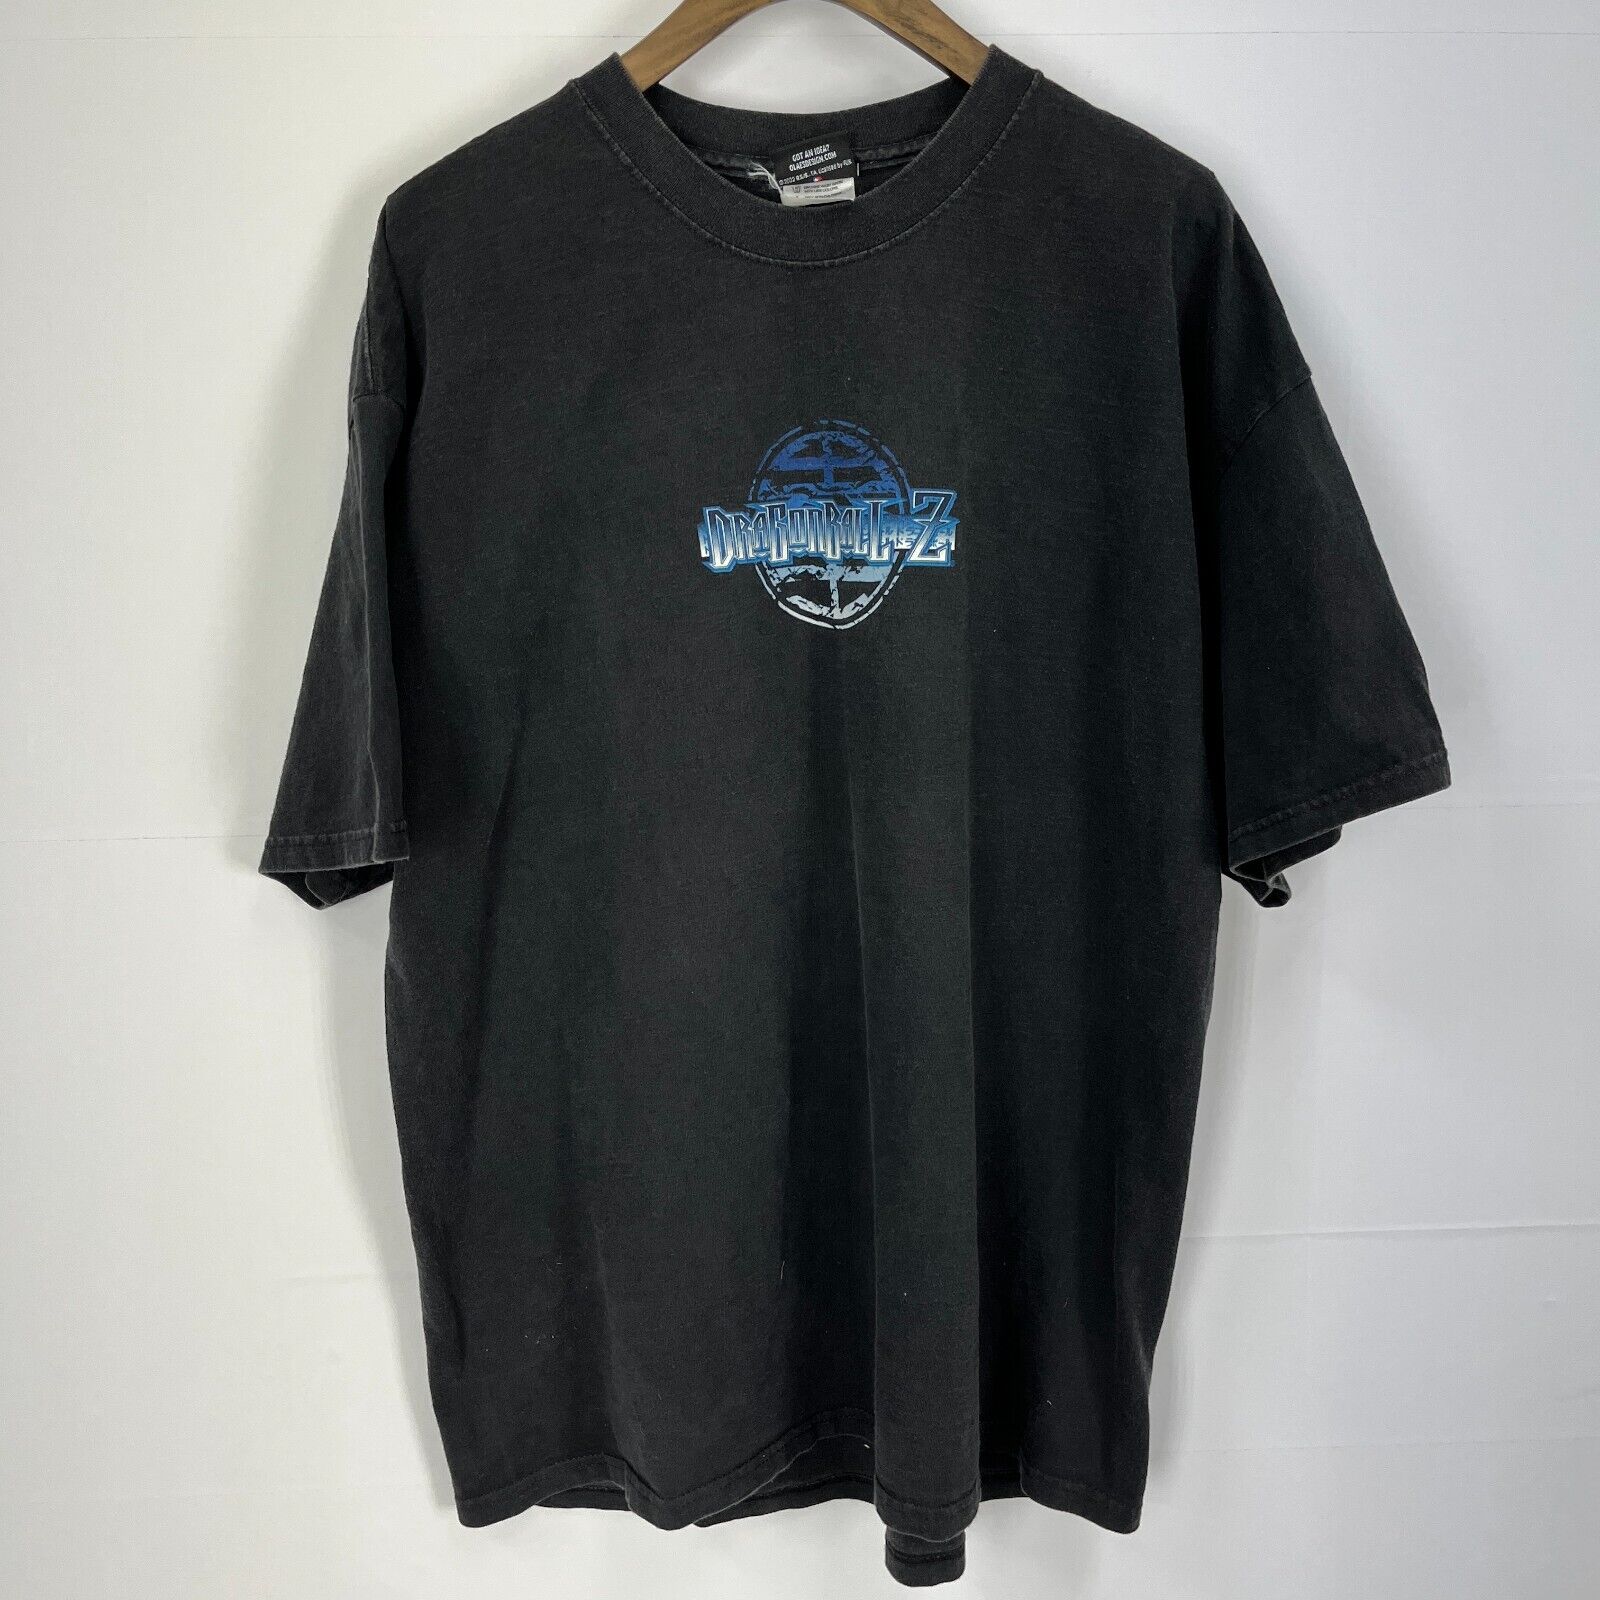 Vintage 2001 Dragon Ball Z Goku and Gohan Black T-Shirt Size XL